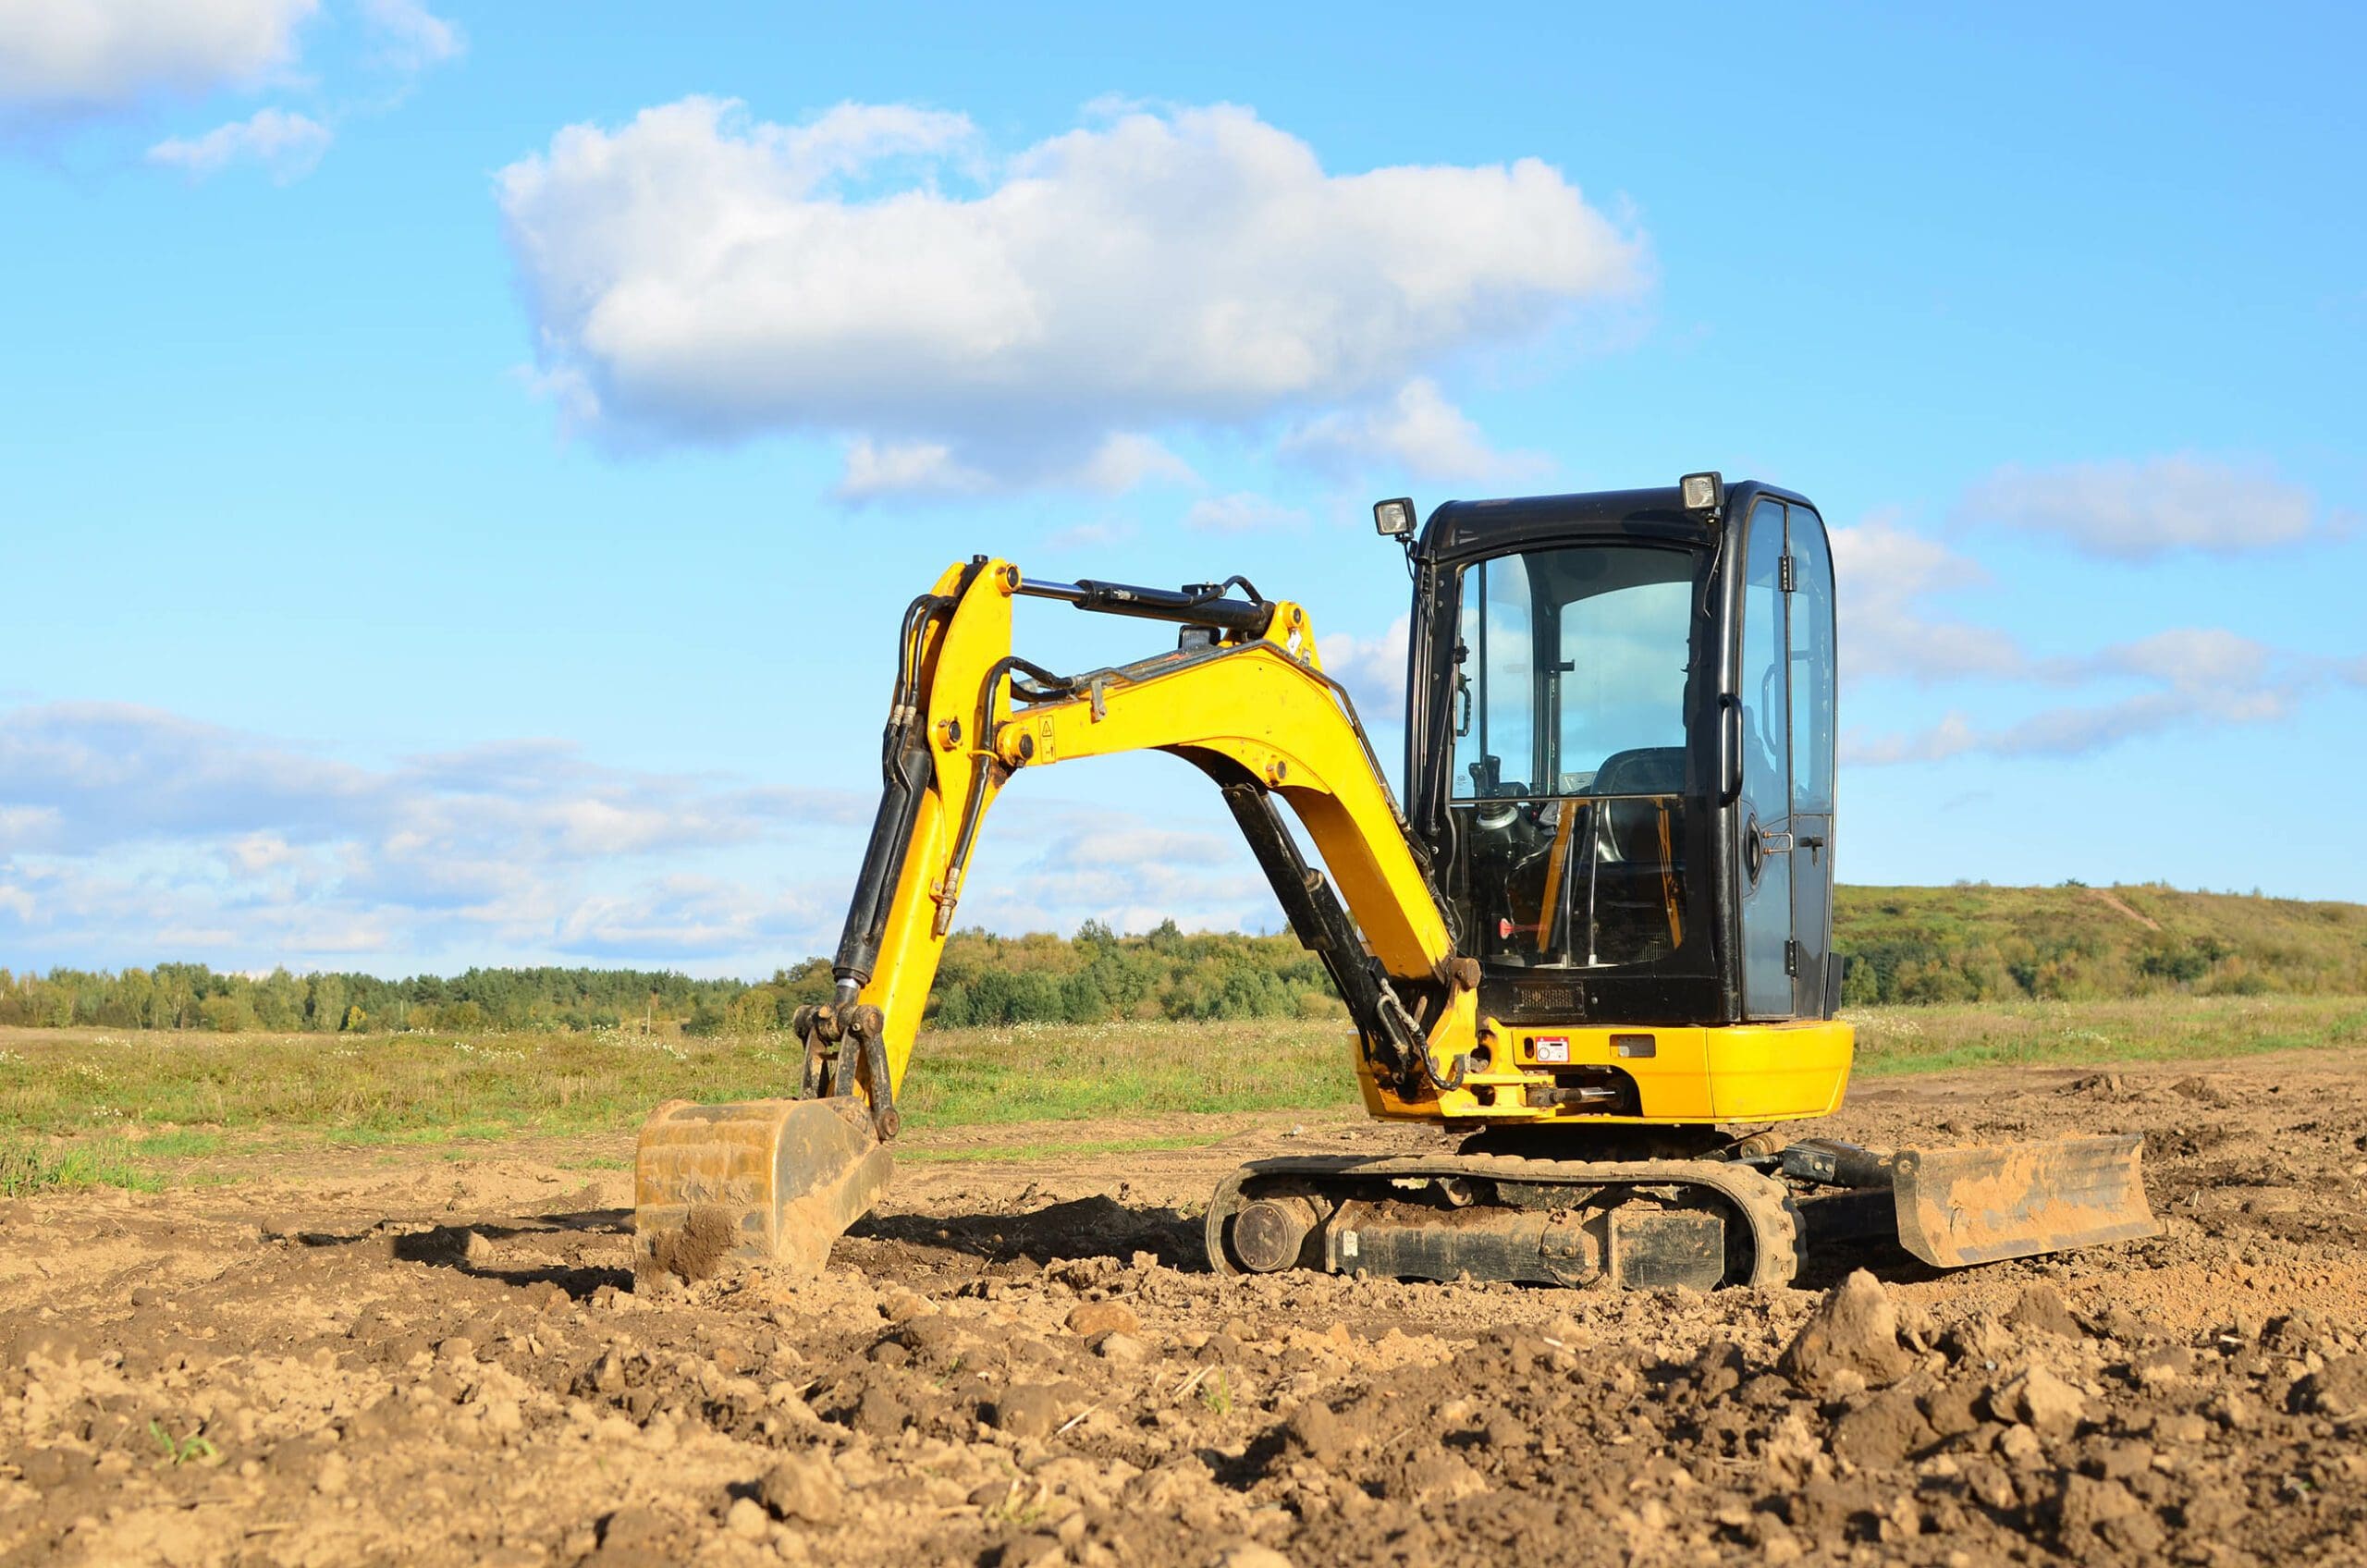 Excavator digging in a field